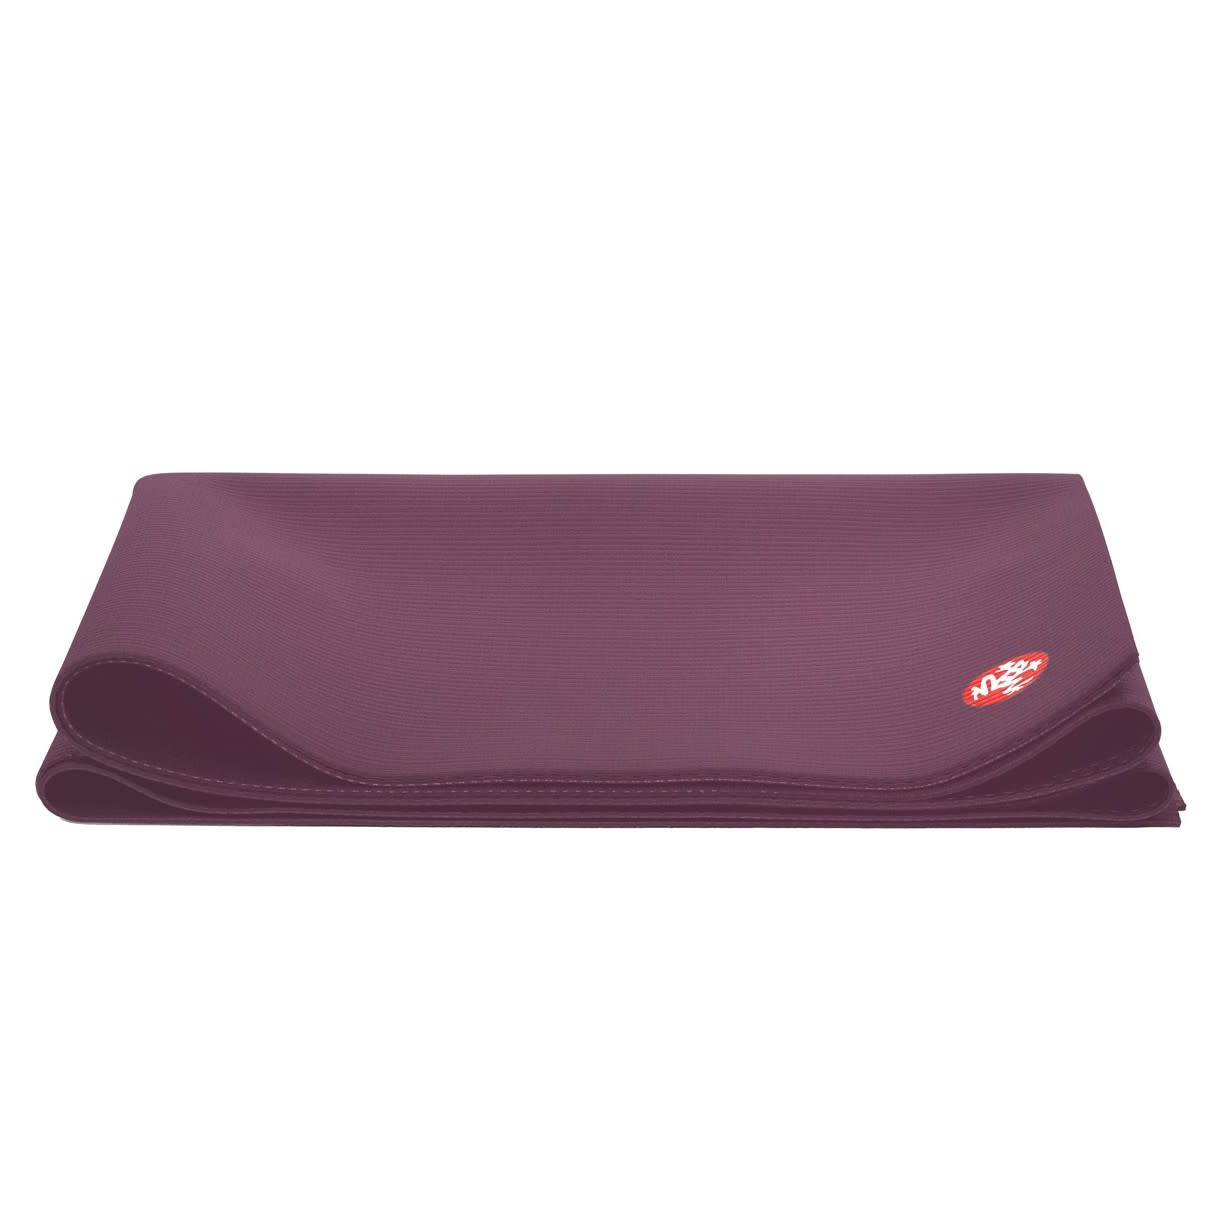 manduka pro yoga and pilates mat